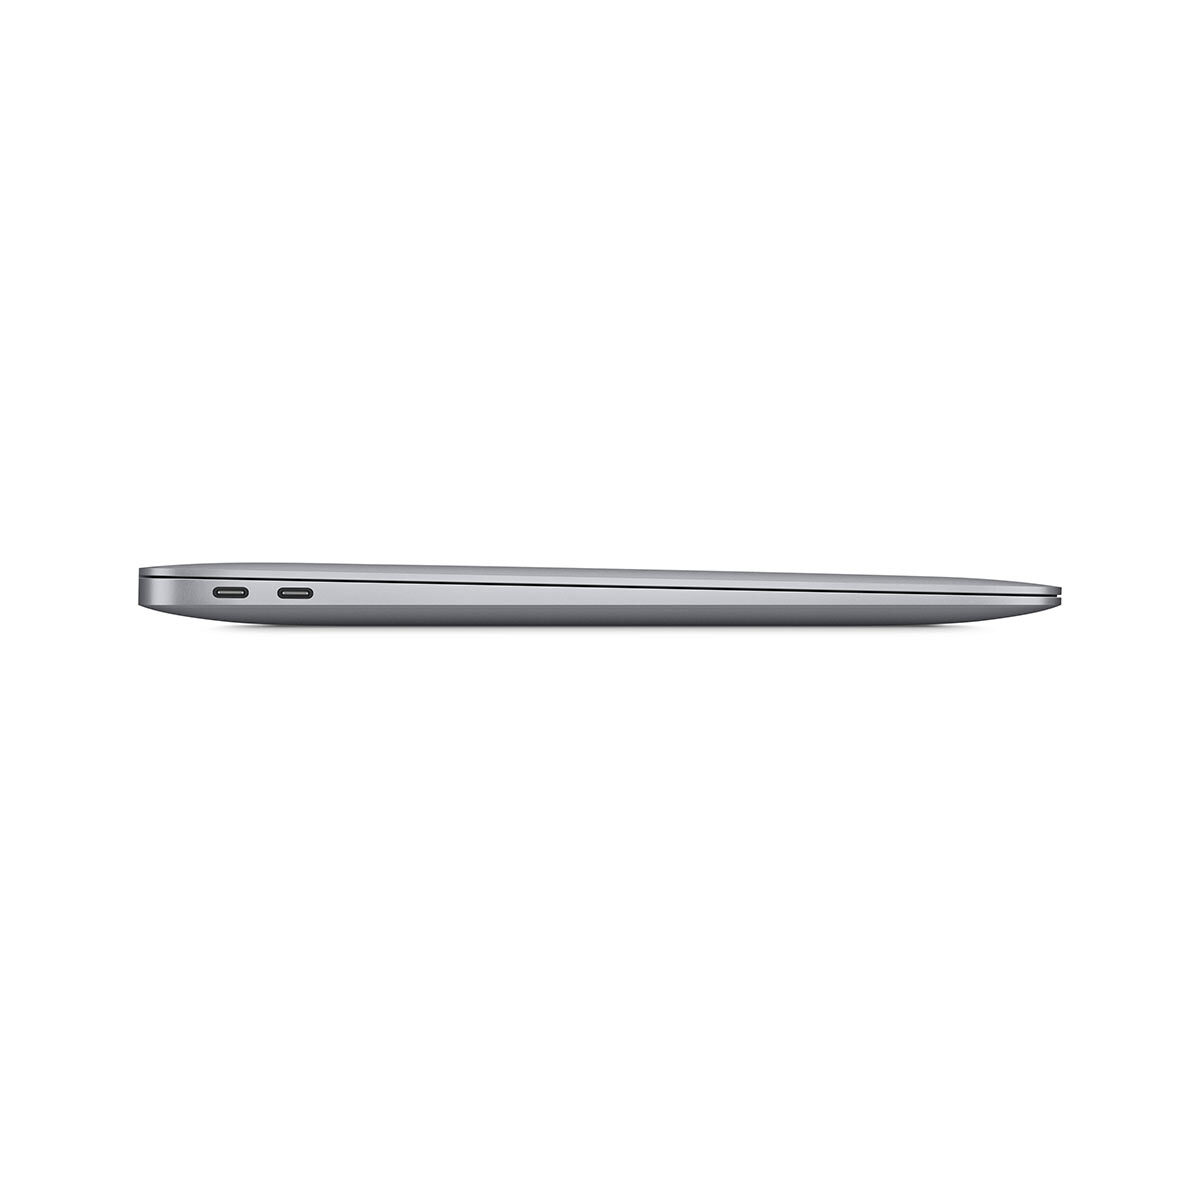 Buy Apple MacBook Air 2020, Apple M1 Chip, 16GB RAM, 1TB SSD, 13.3 Inch in Space Grey, Z1252000780081 at costco.co.uk